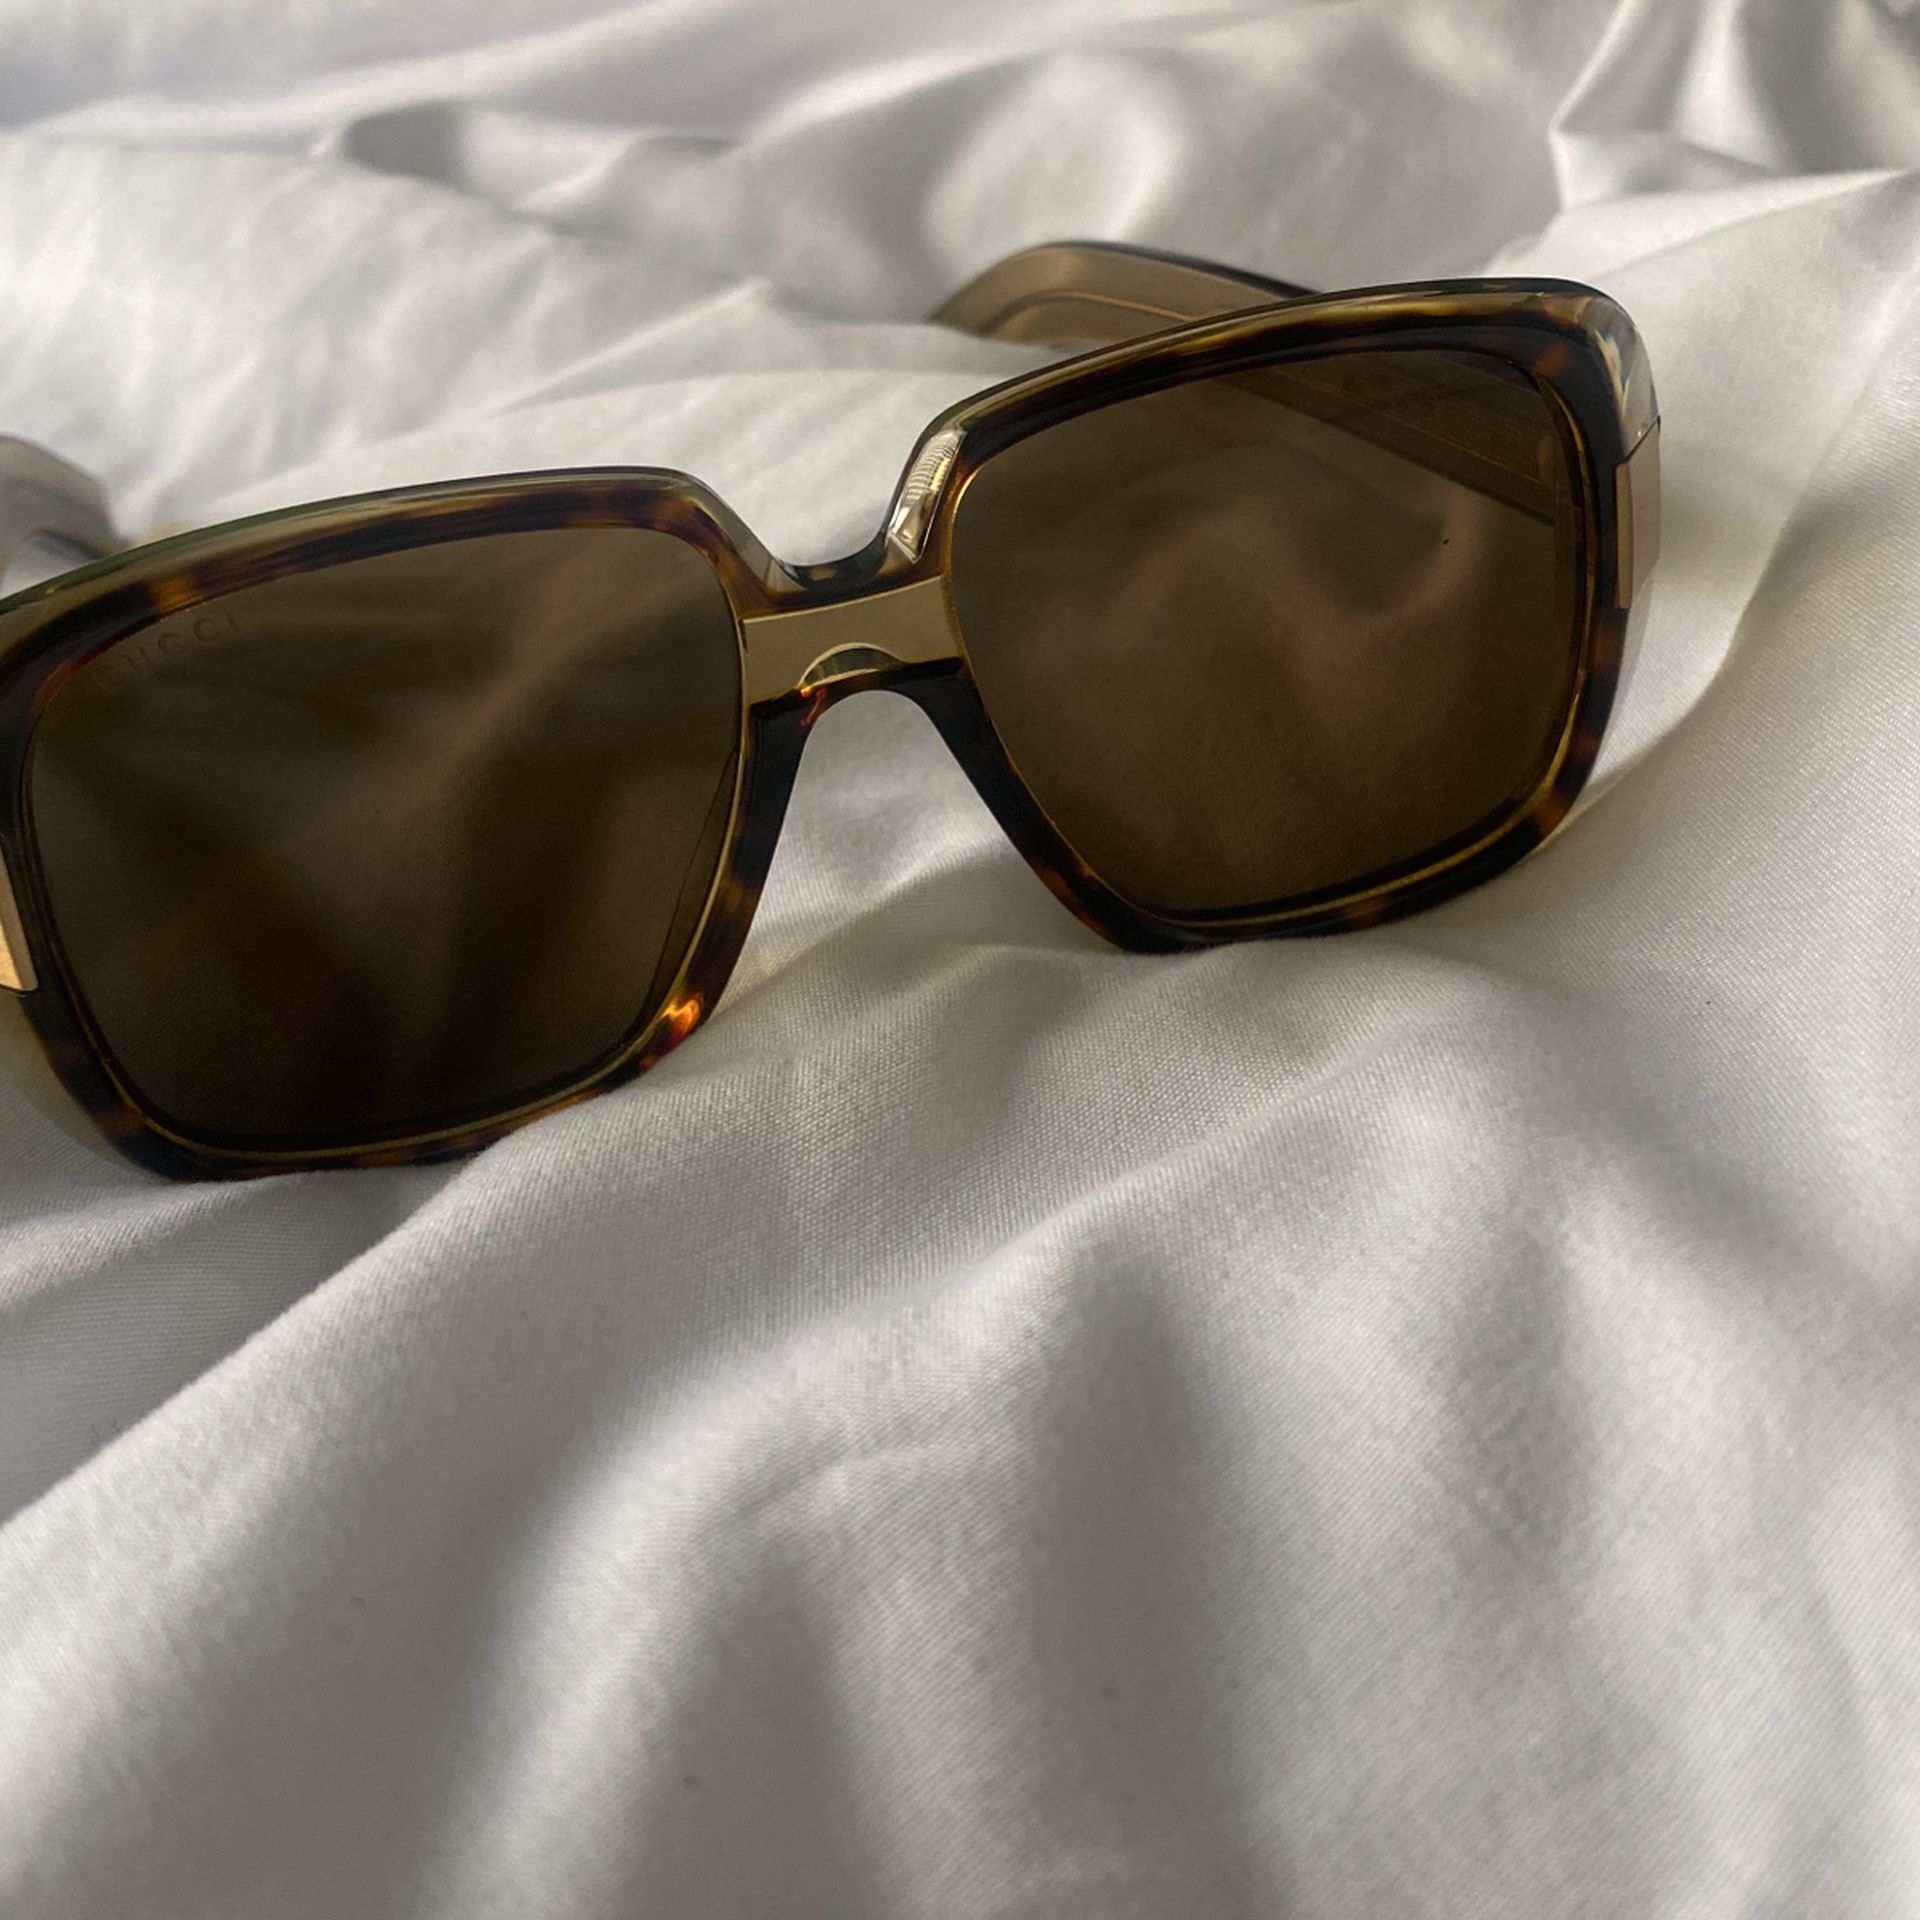 New Authentic GUCCI sunglasses Tortoise Print Model  GG0318S